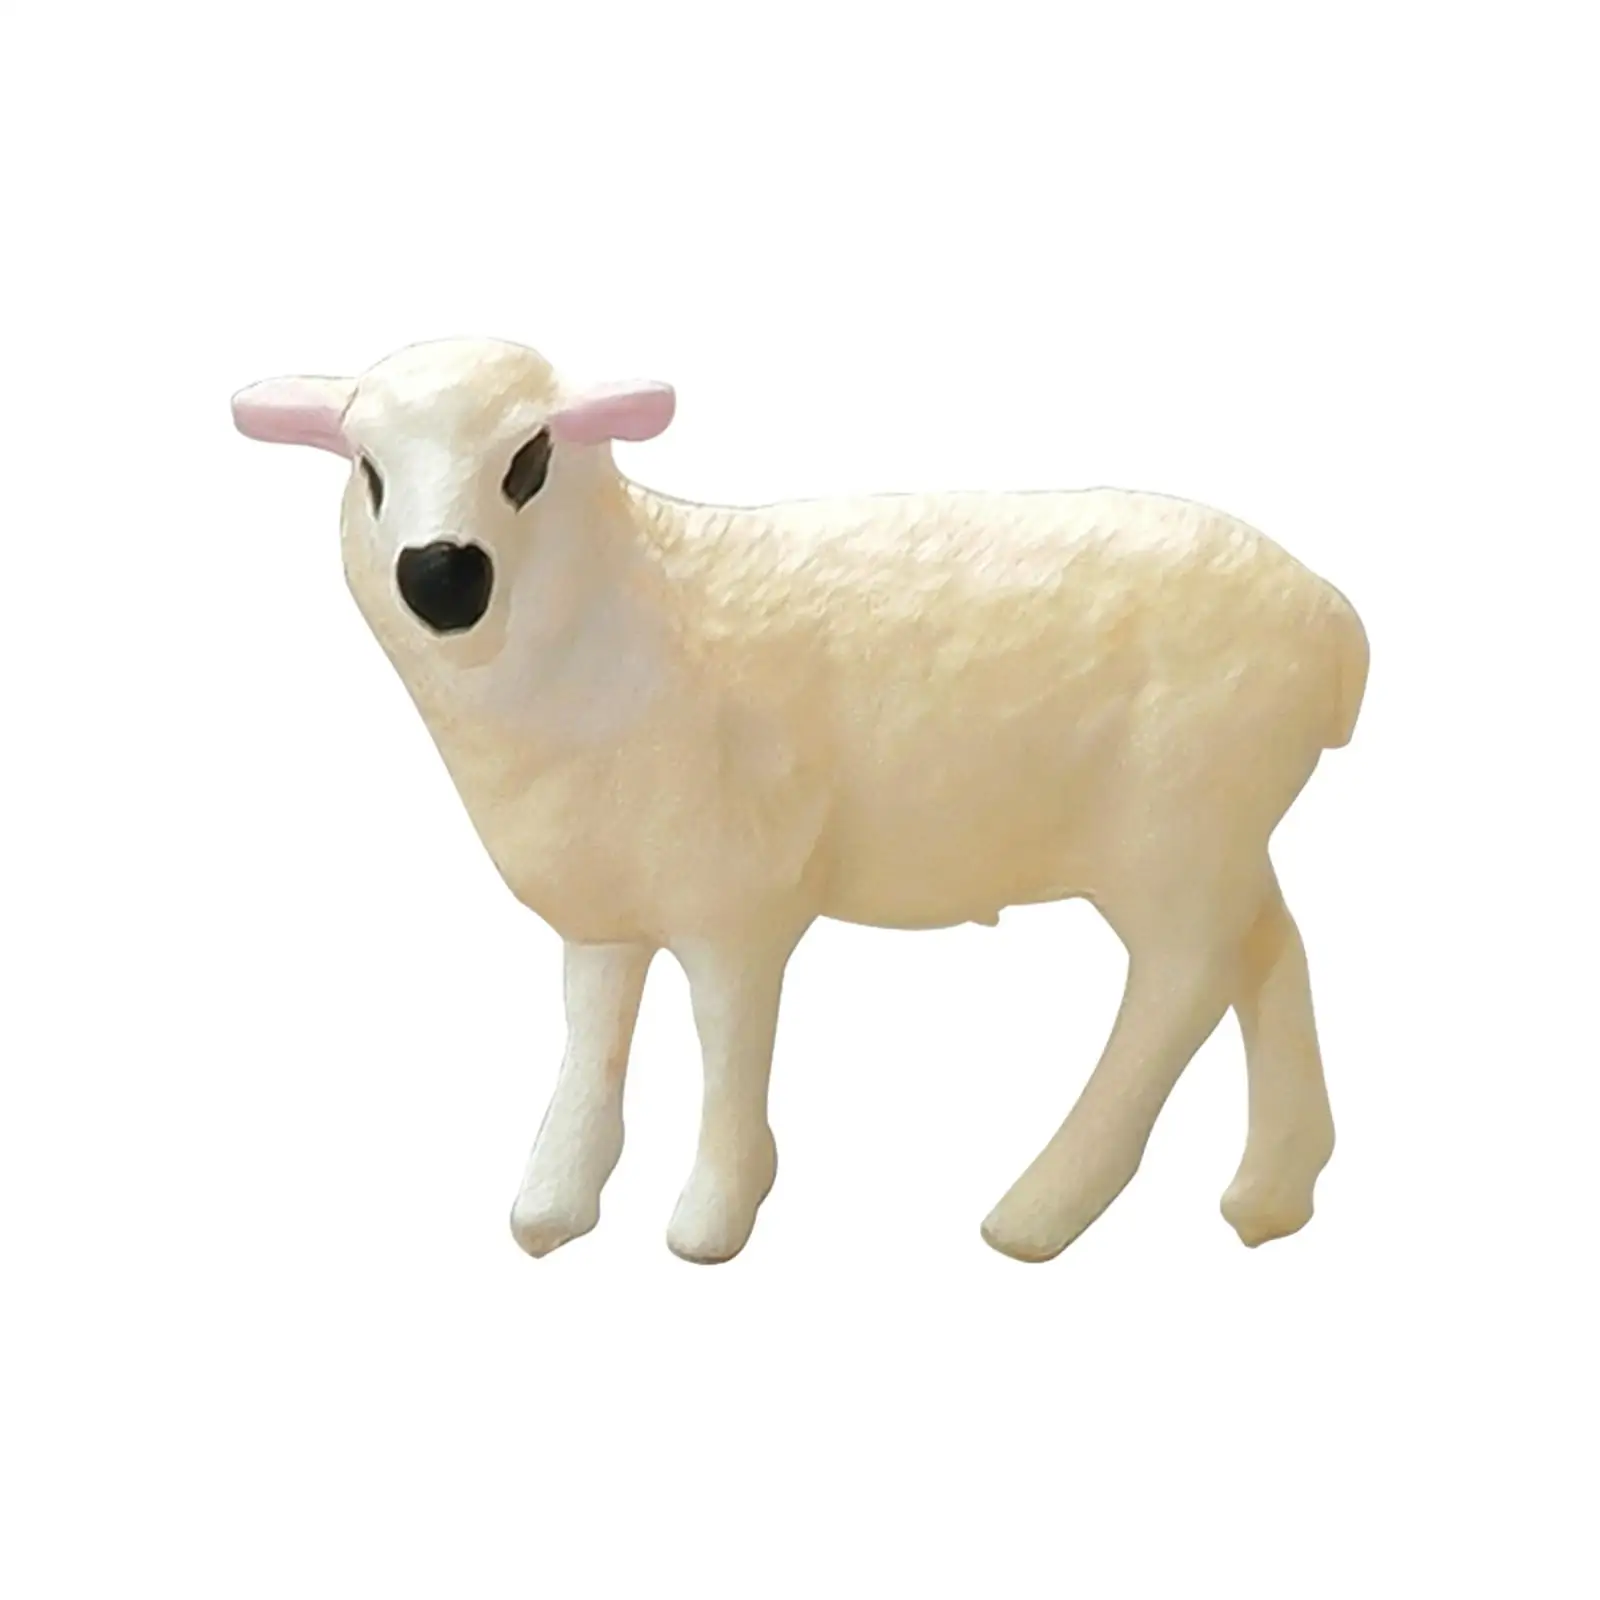 Animal Figurine Mini Lamb Figure 1/64 Hand Painted Toy Animal Figures DIY Projects Micro Landscape Photo Props Desktop Ornament